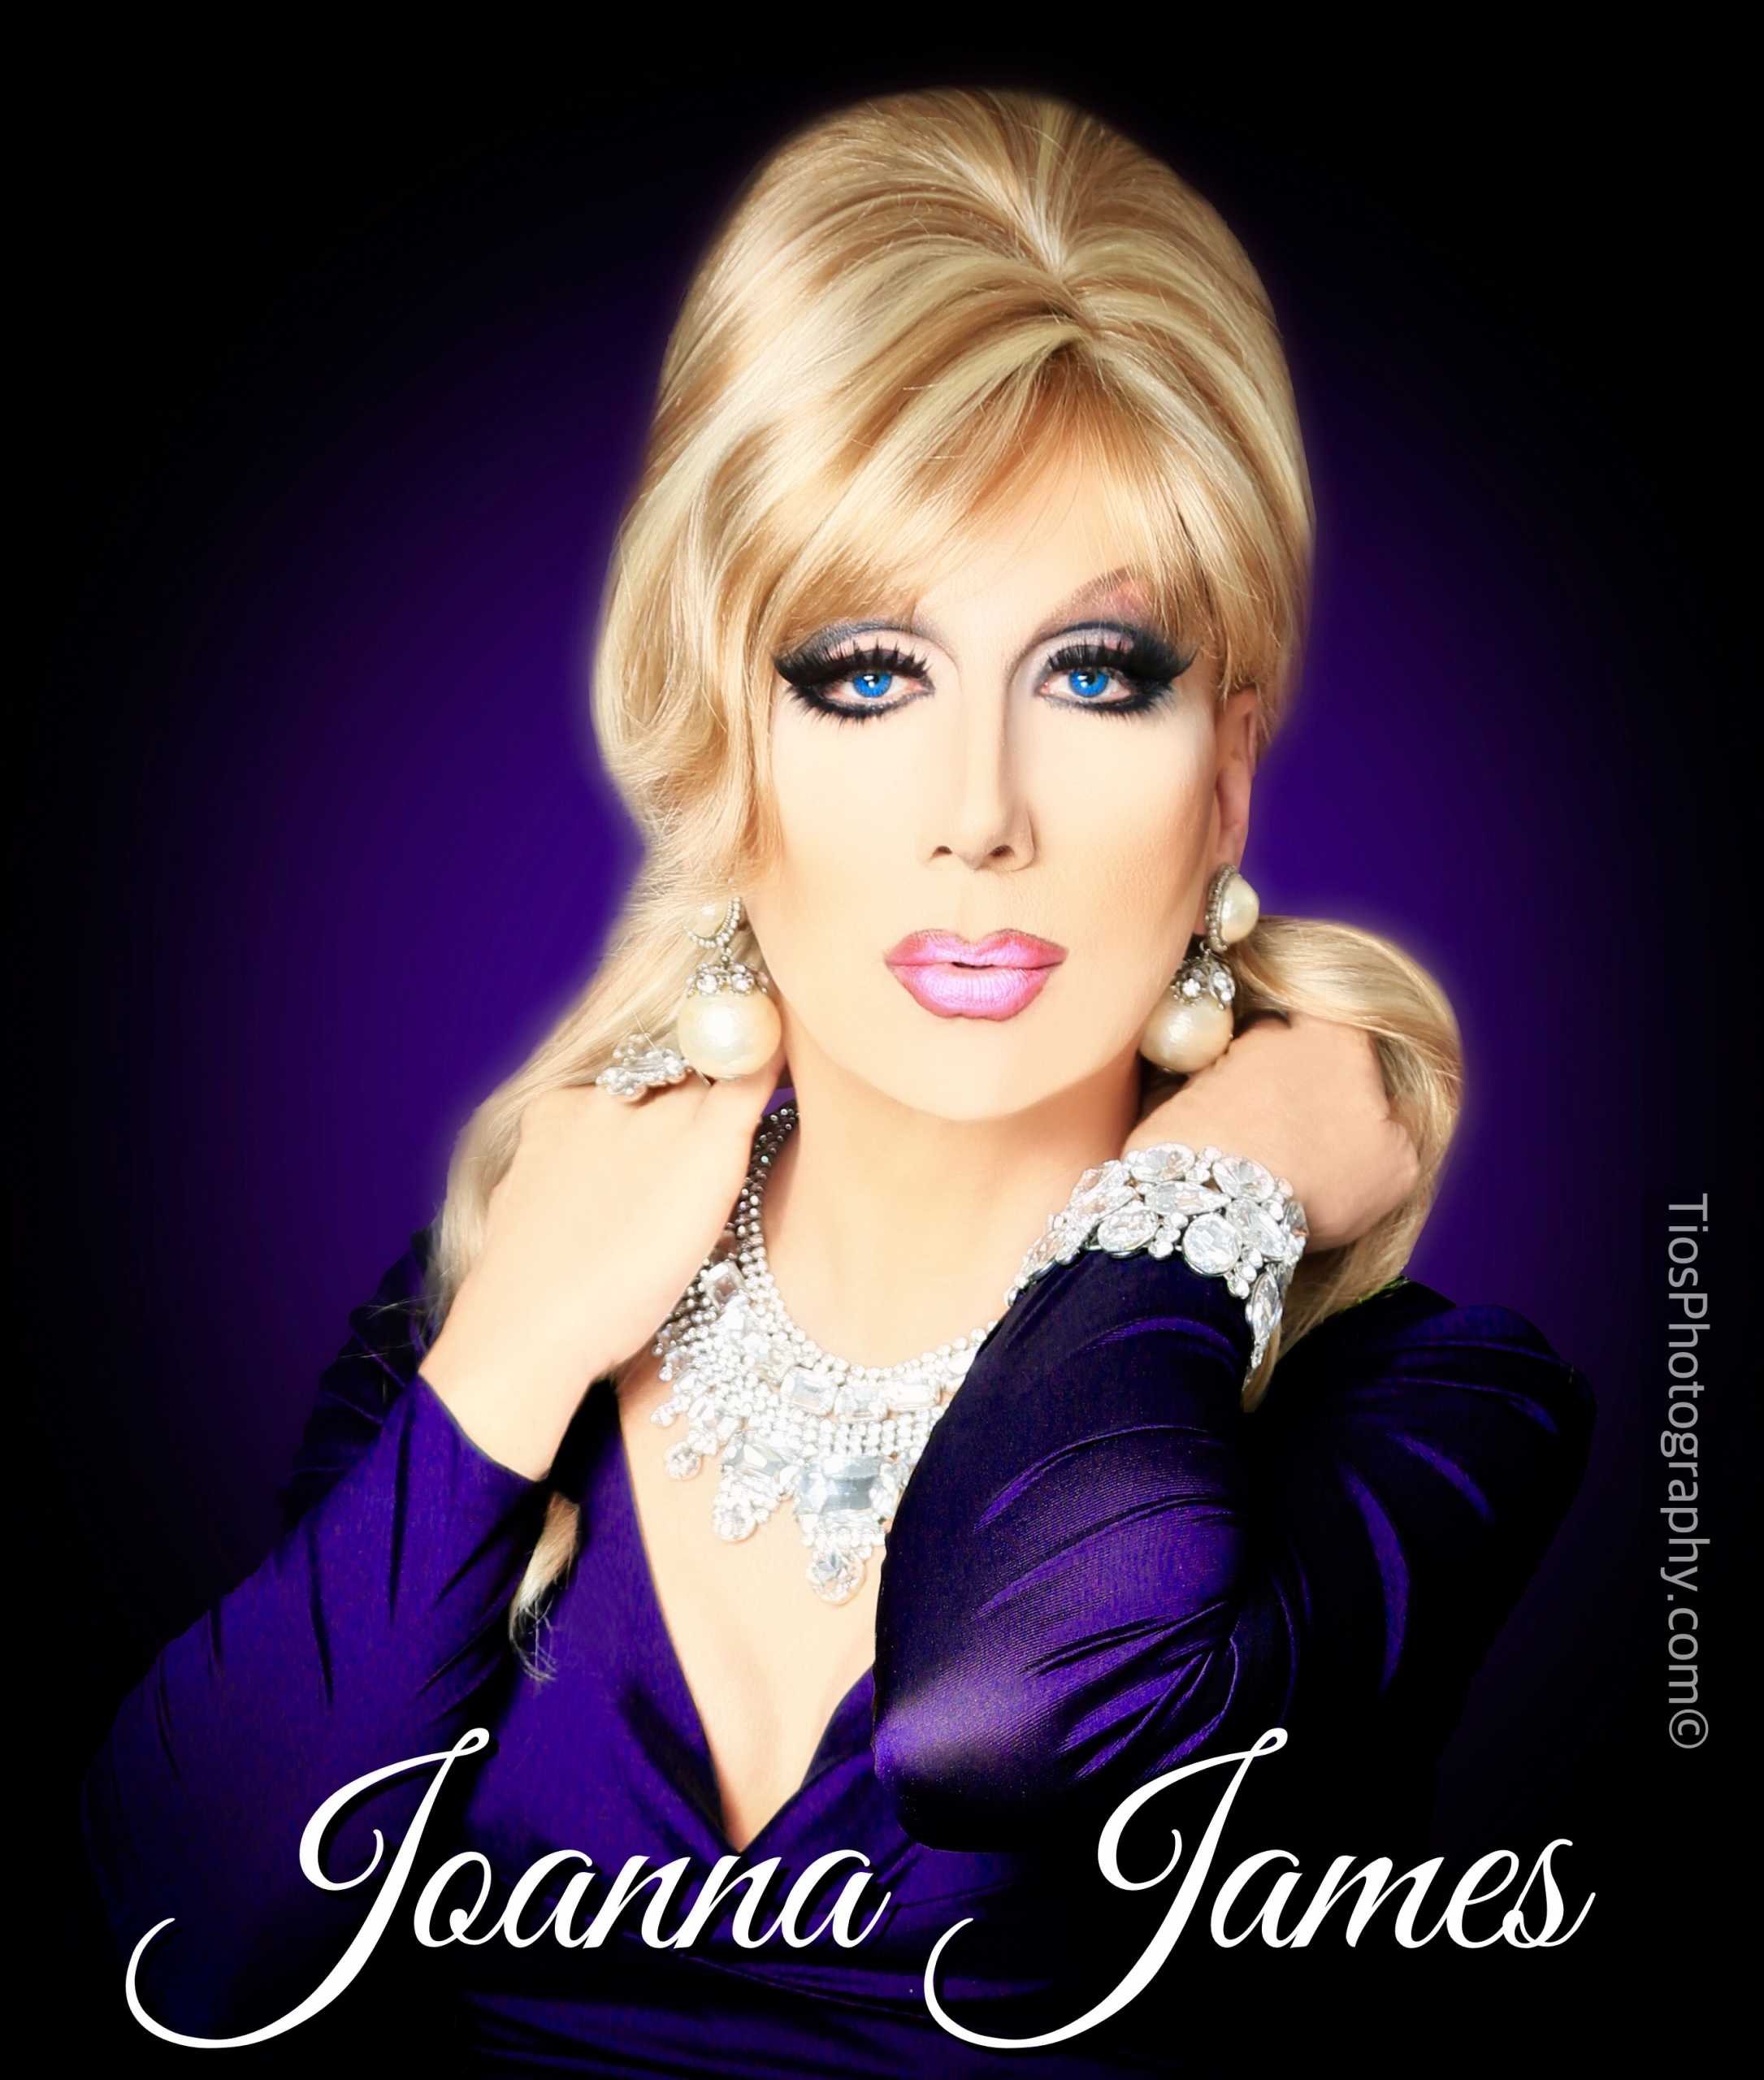 Joanna James